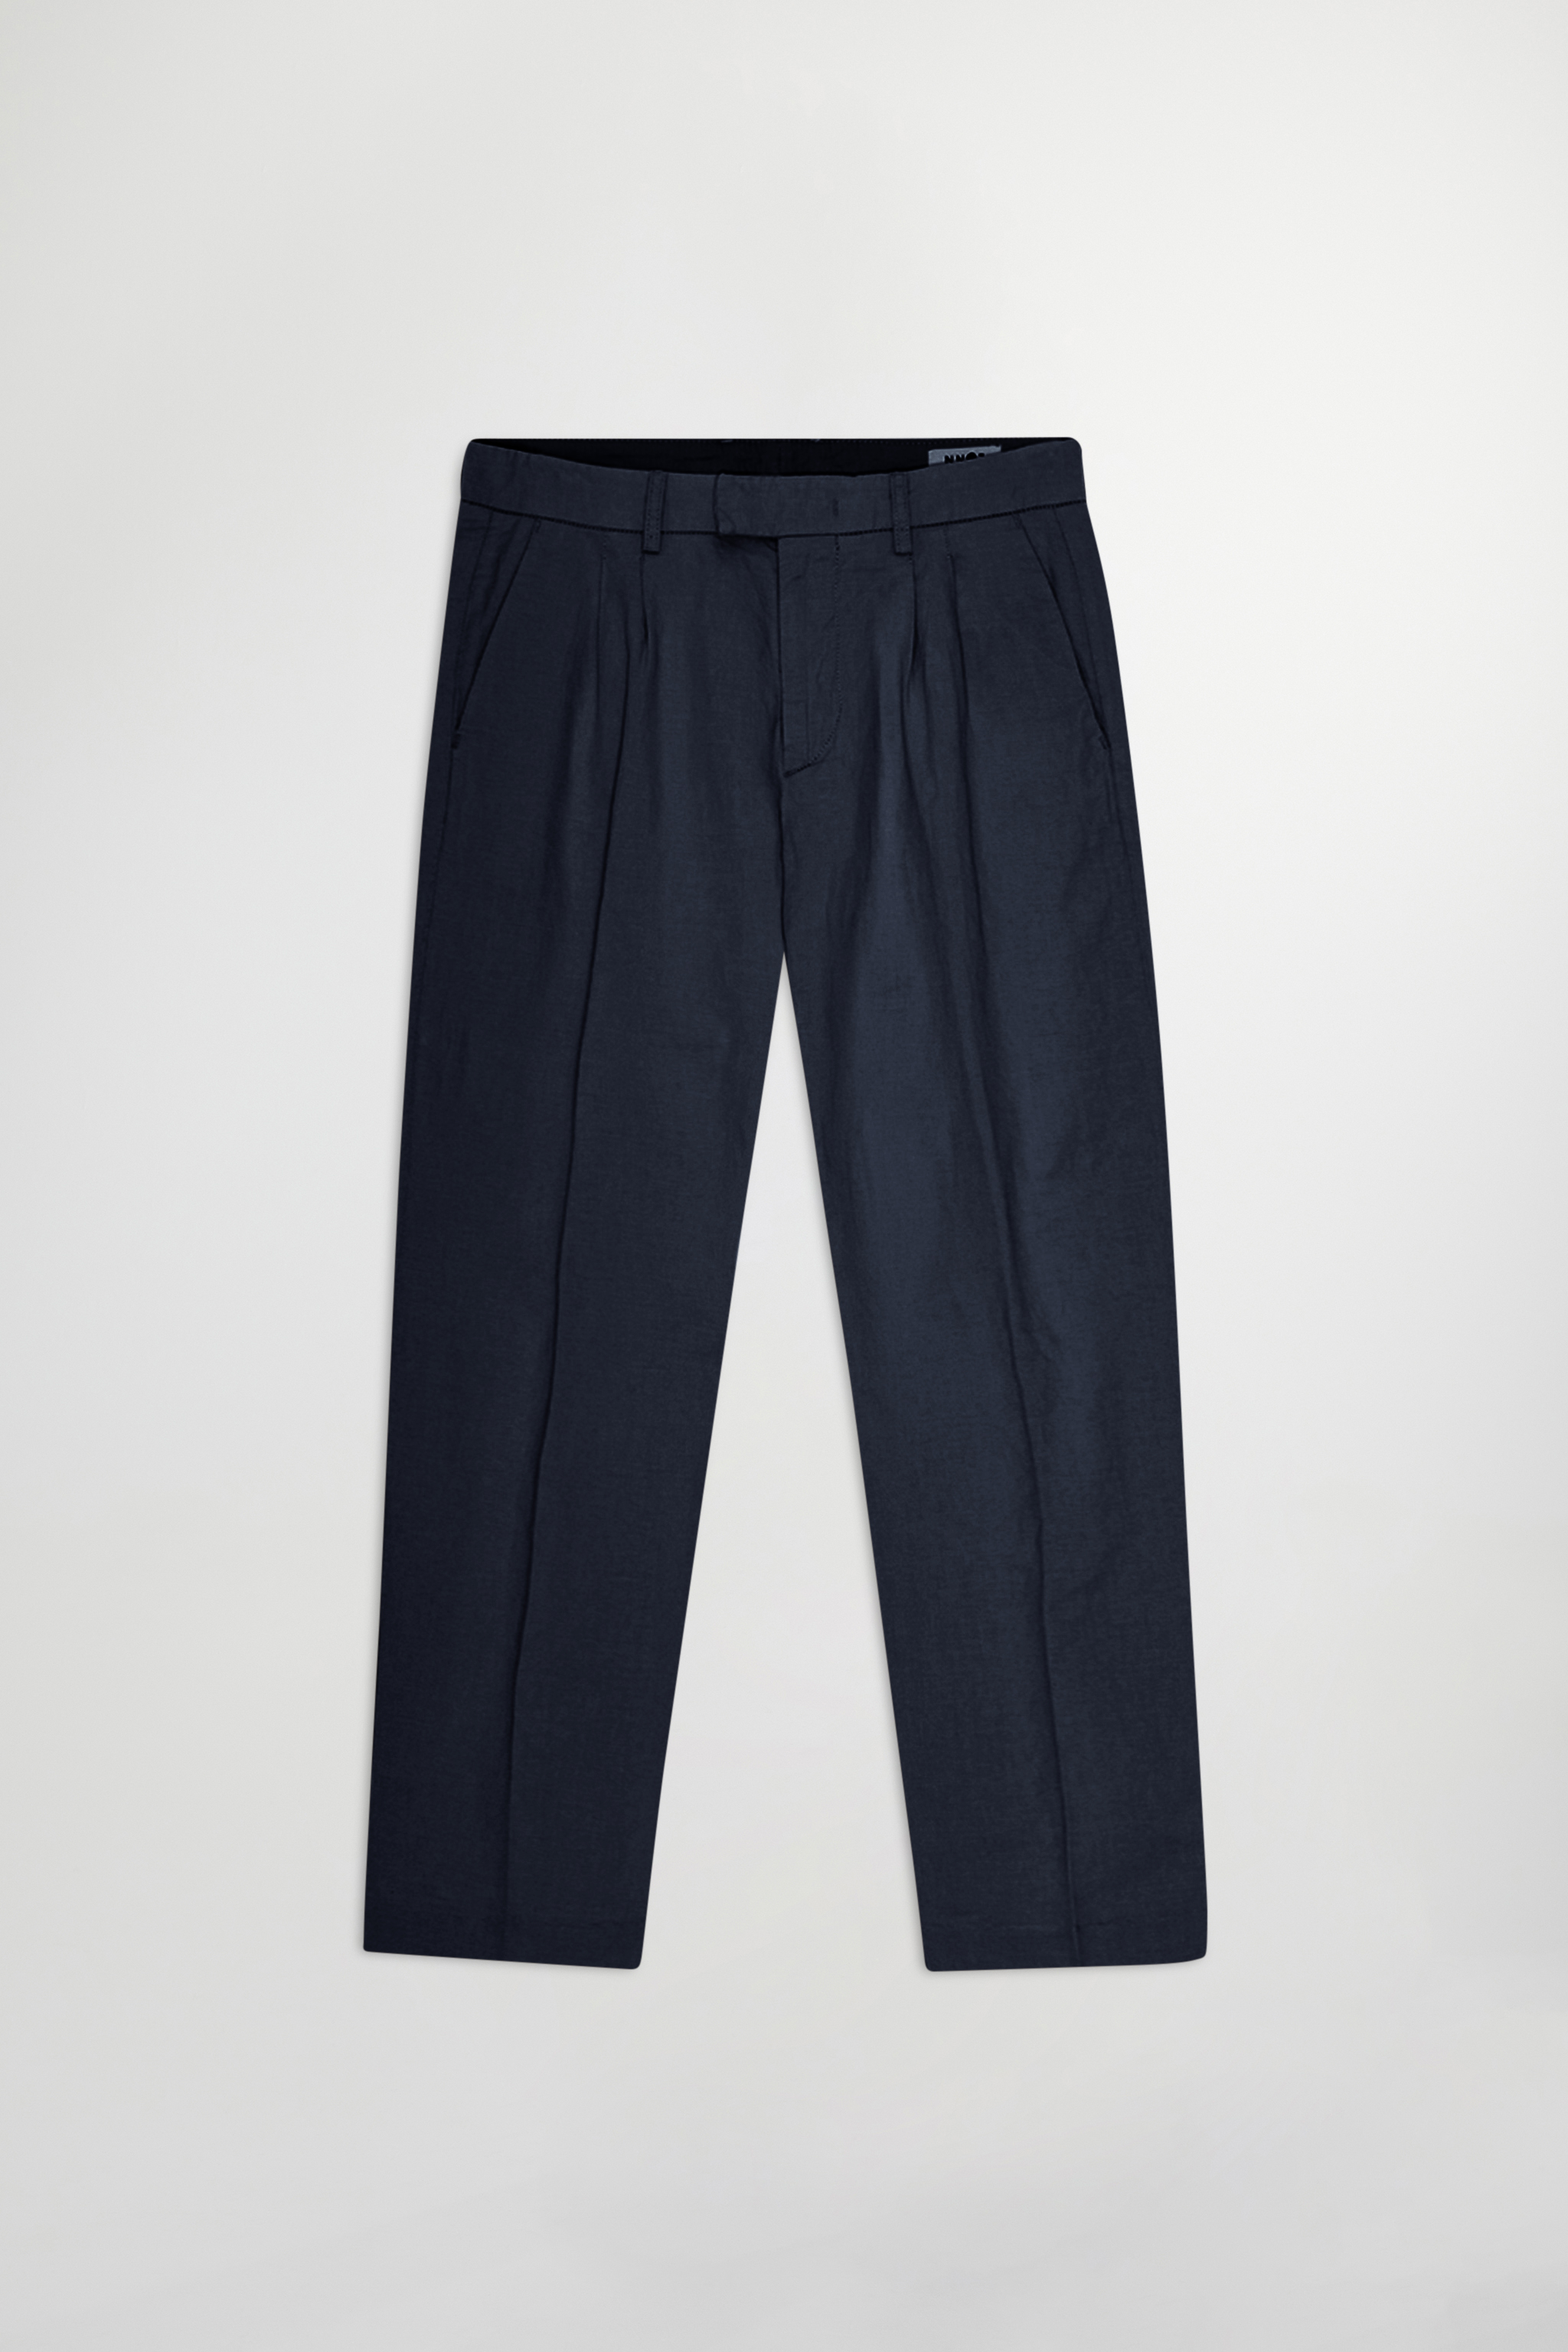 Valentin 1449 men's trousers - Blue - Buy online at NN.07®